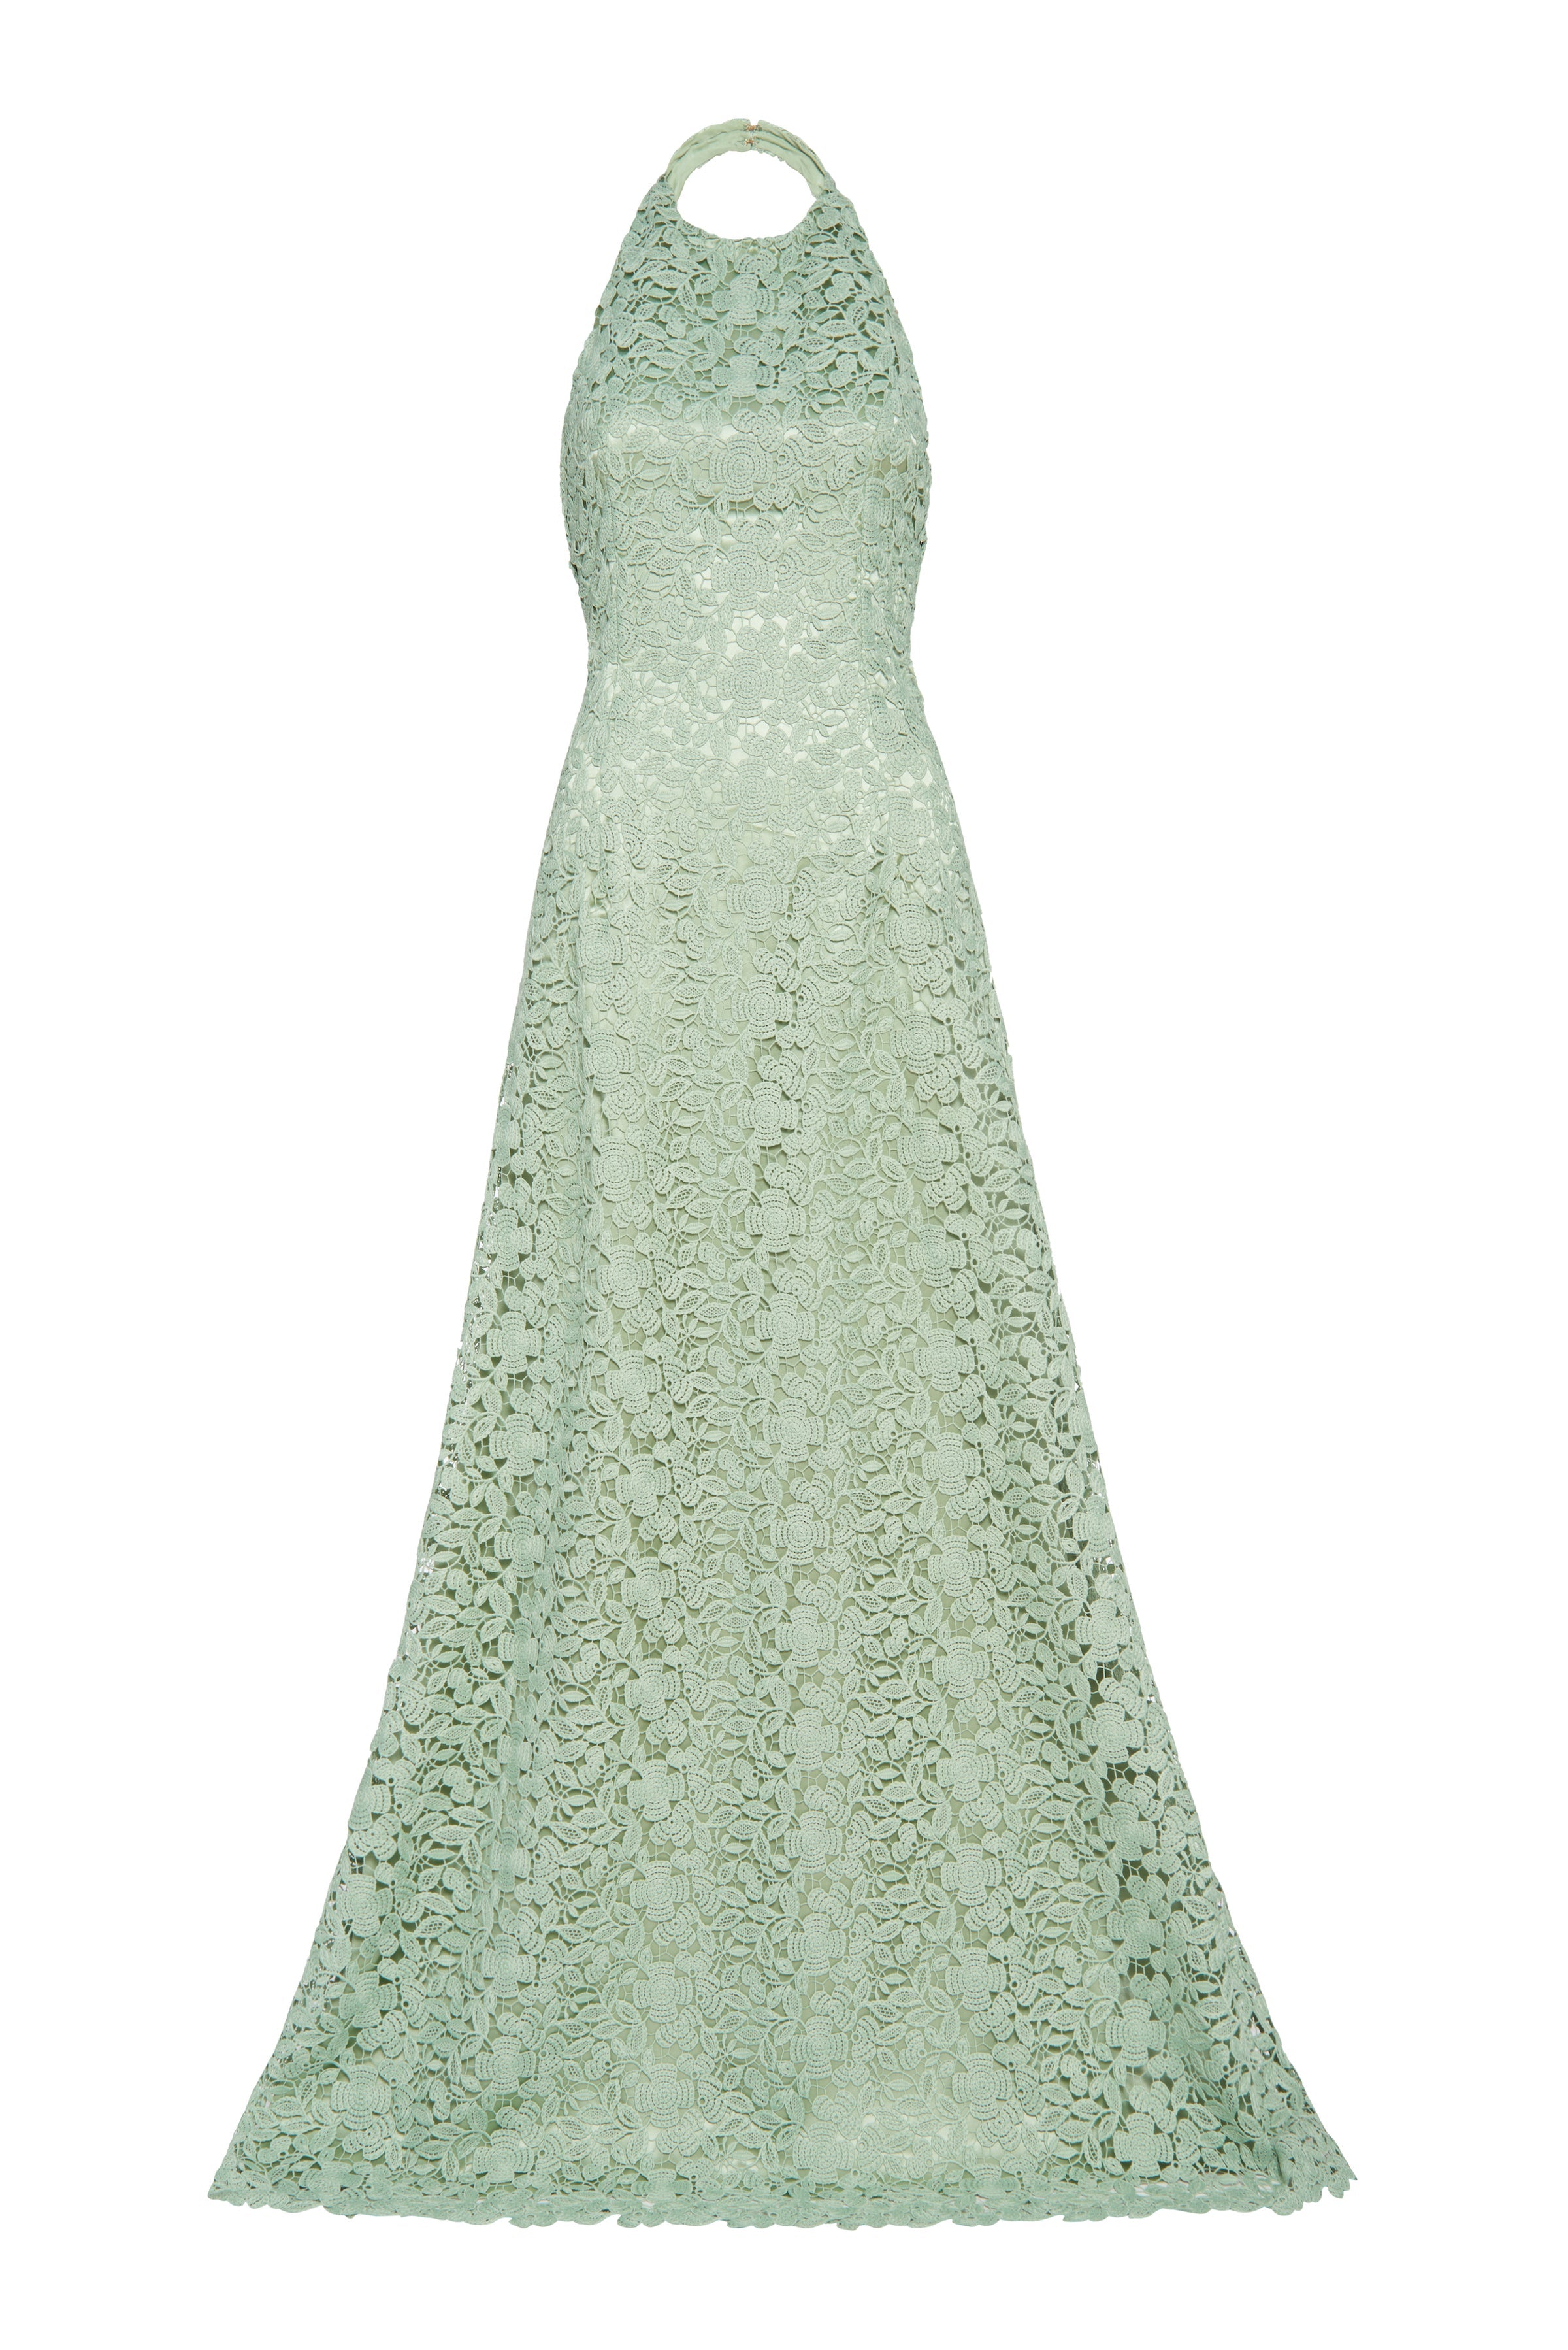 SALE: Sahara Green Crochet Lace Gown